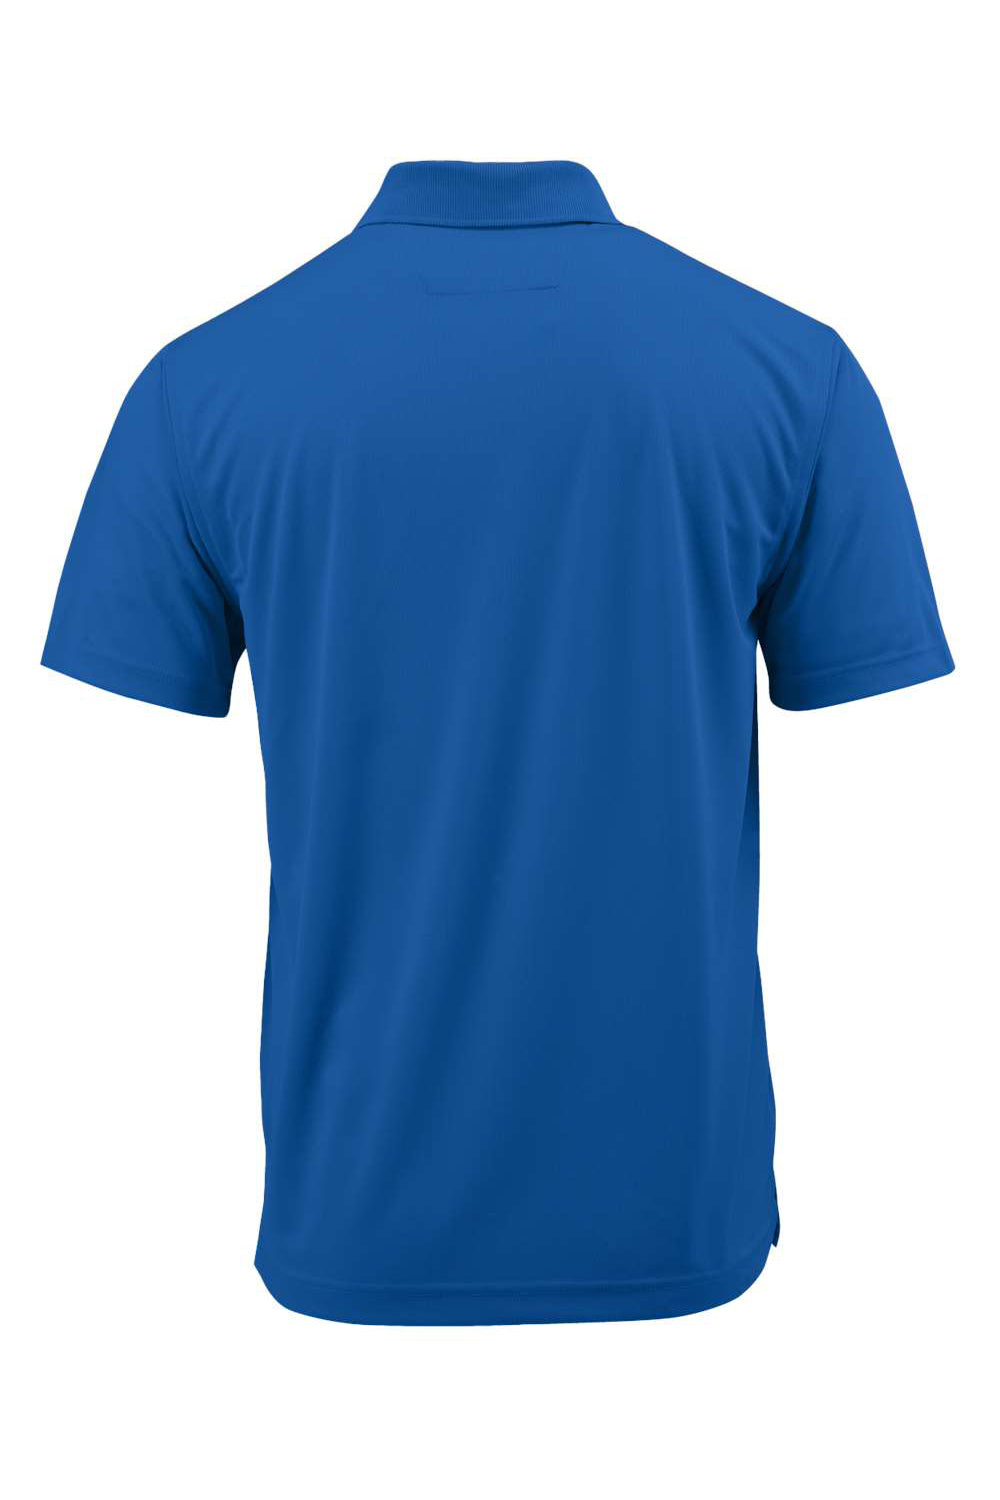 Paragon 100 Mens Saratoga Performance Mini Mesh Short Sleeve Polo Shirt Royal Blue Flat Back